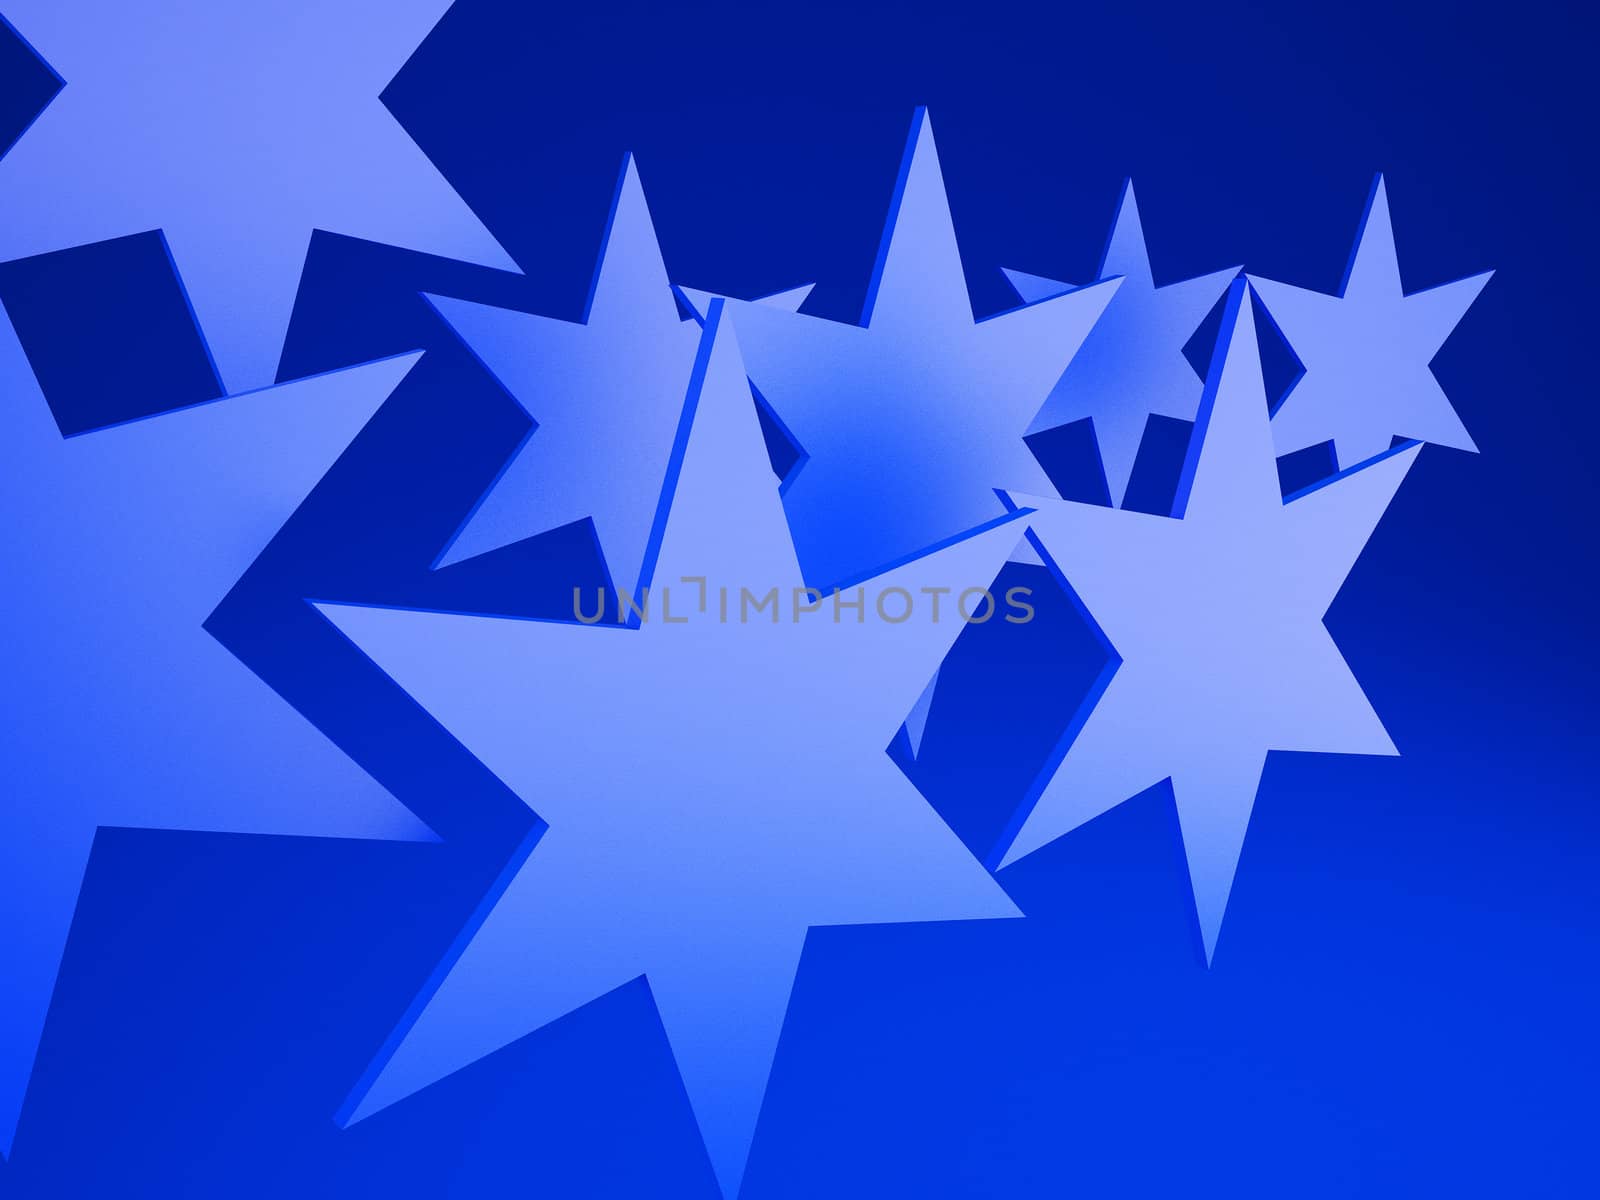 Stars on a blue background. High resolution image. 3d rendered illustration.